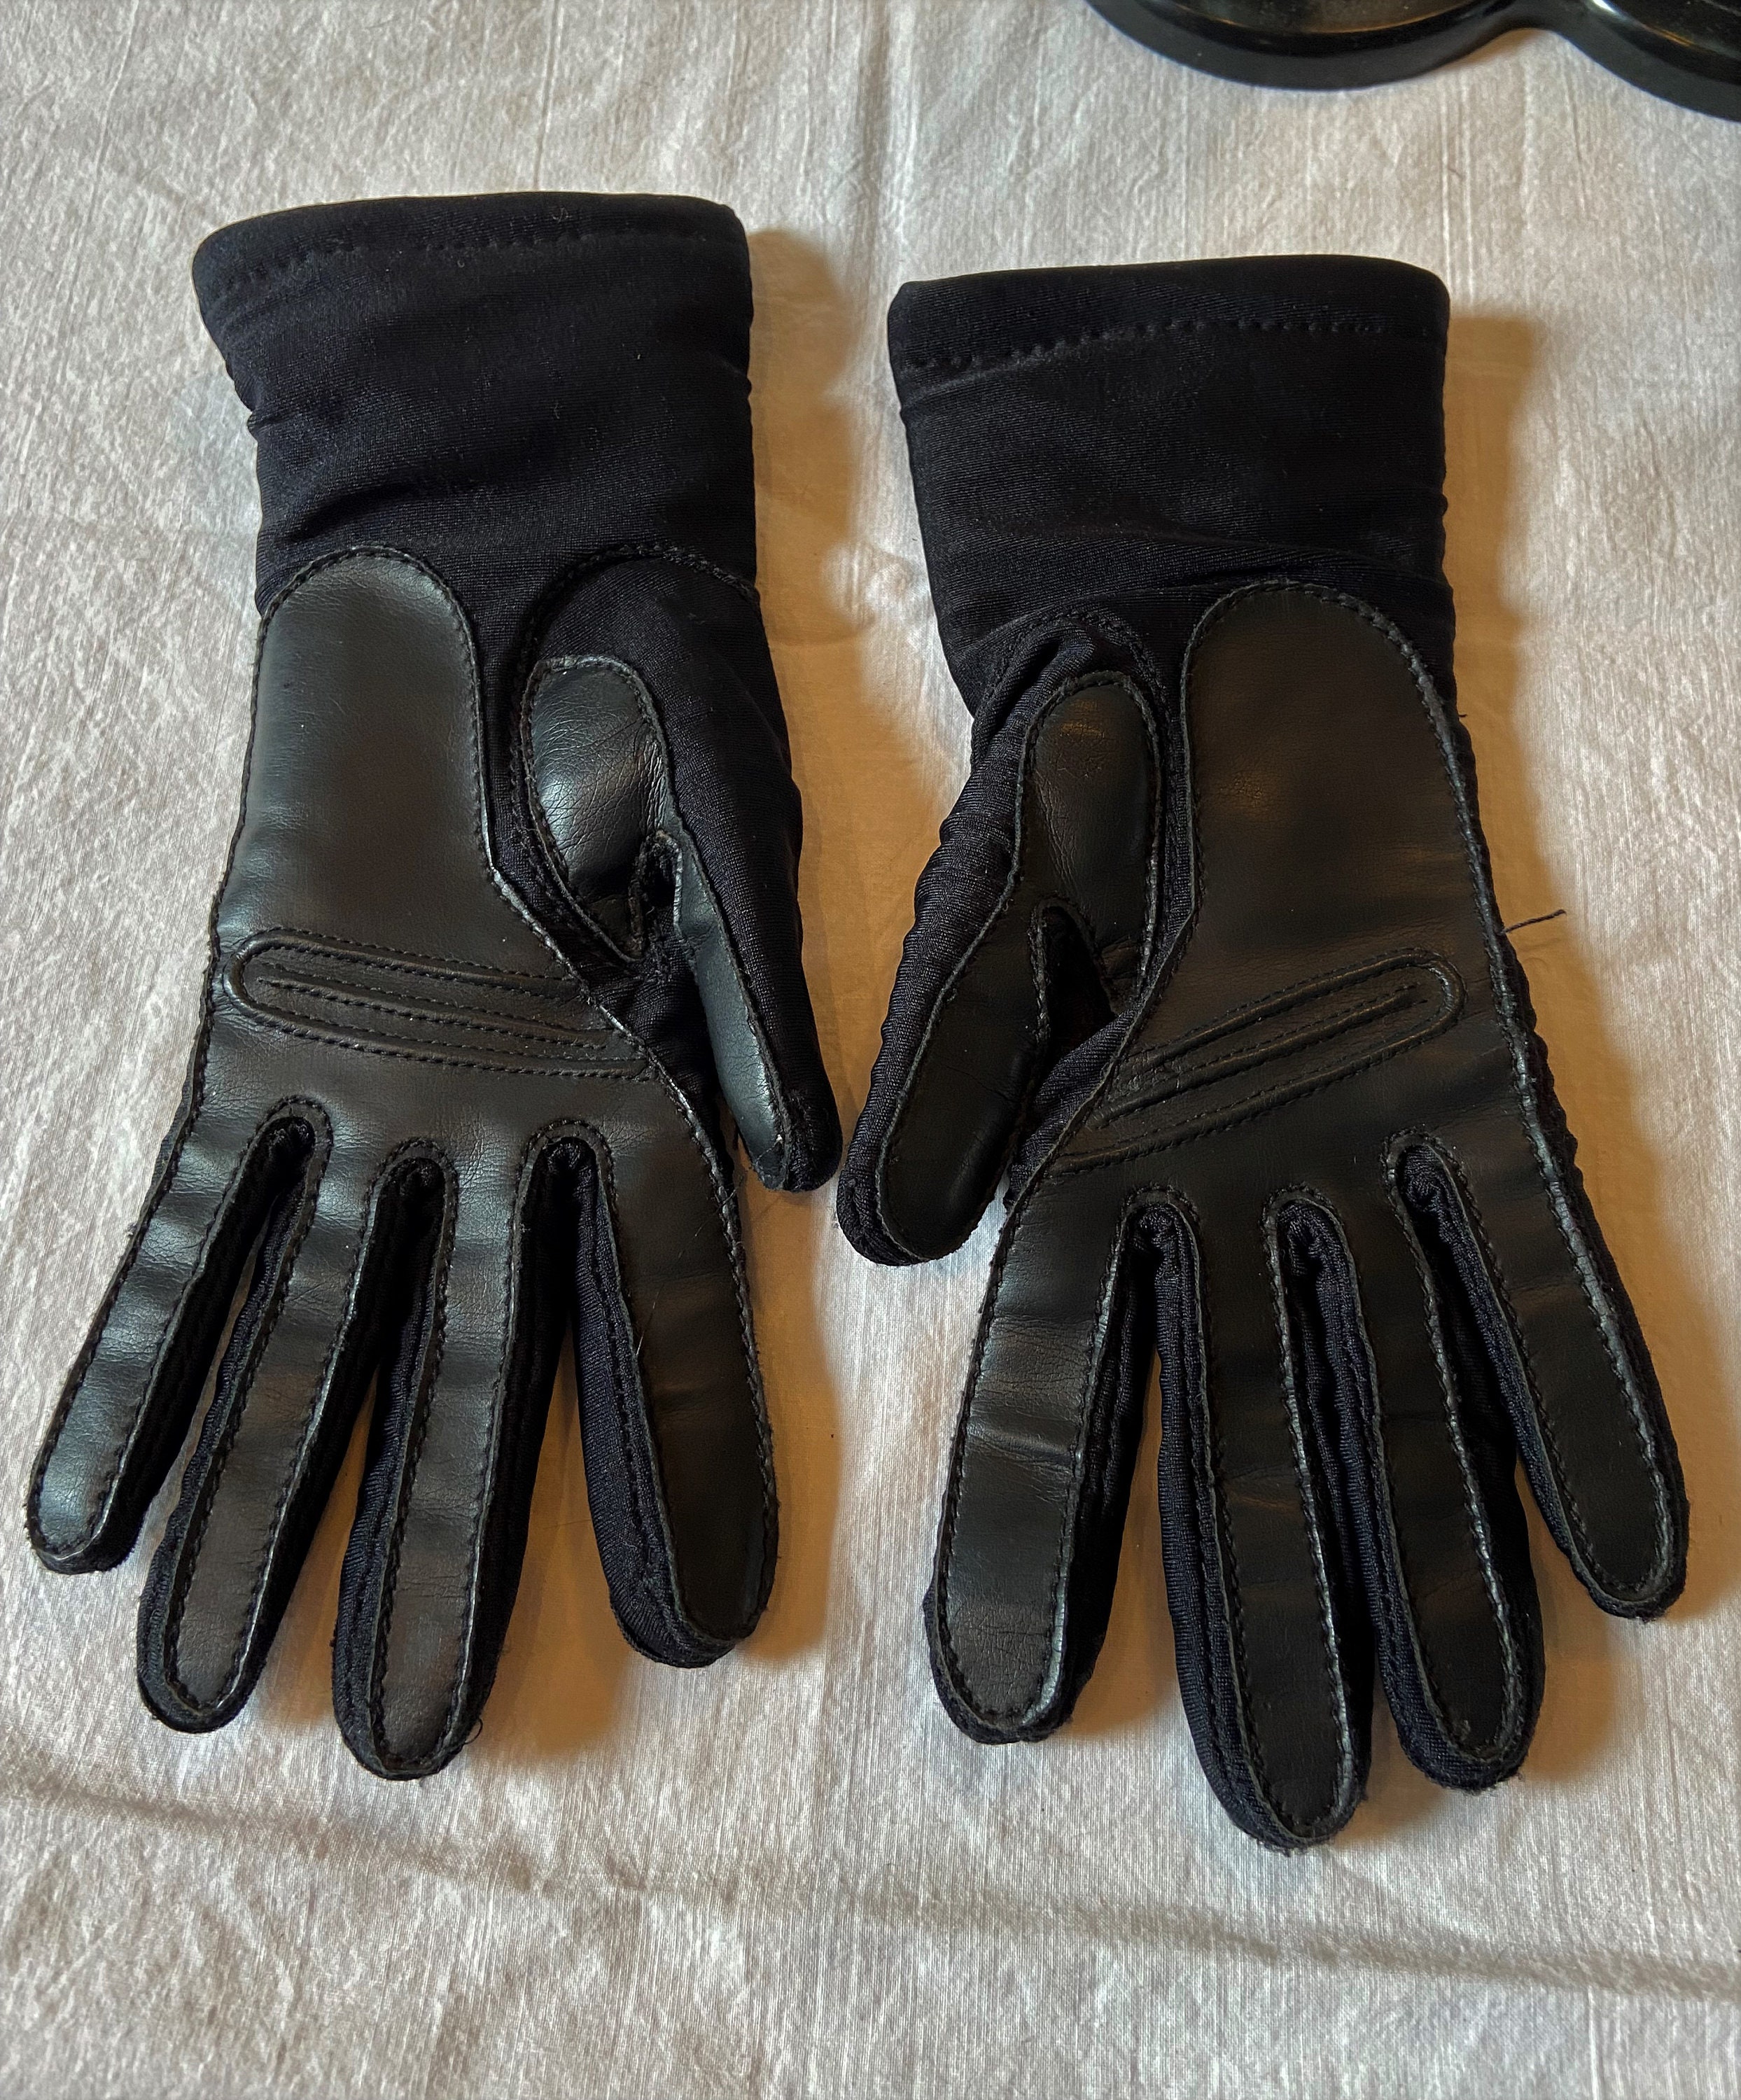 One Black Nylon Original Palms Sweet Gloves Vintage Stretch Trim Leather & Lined Faux W Size - Etsy